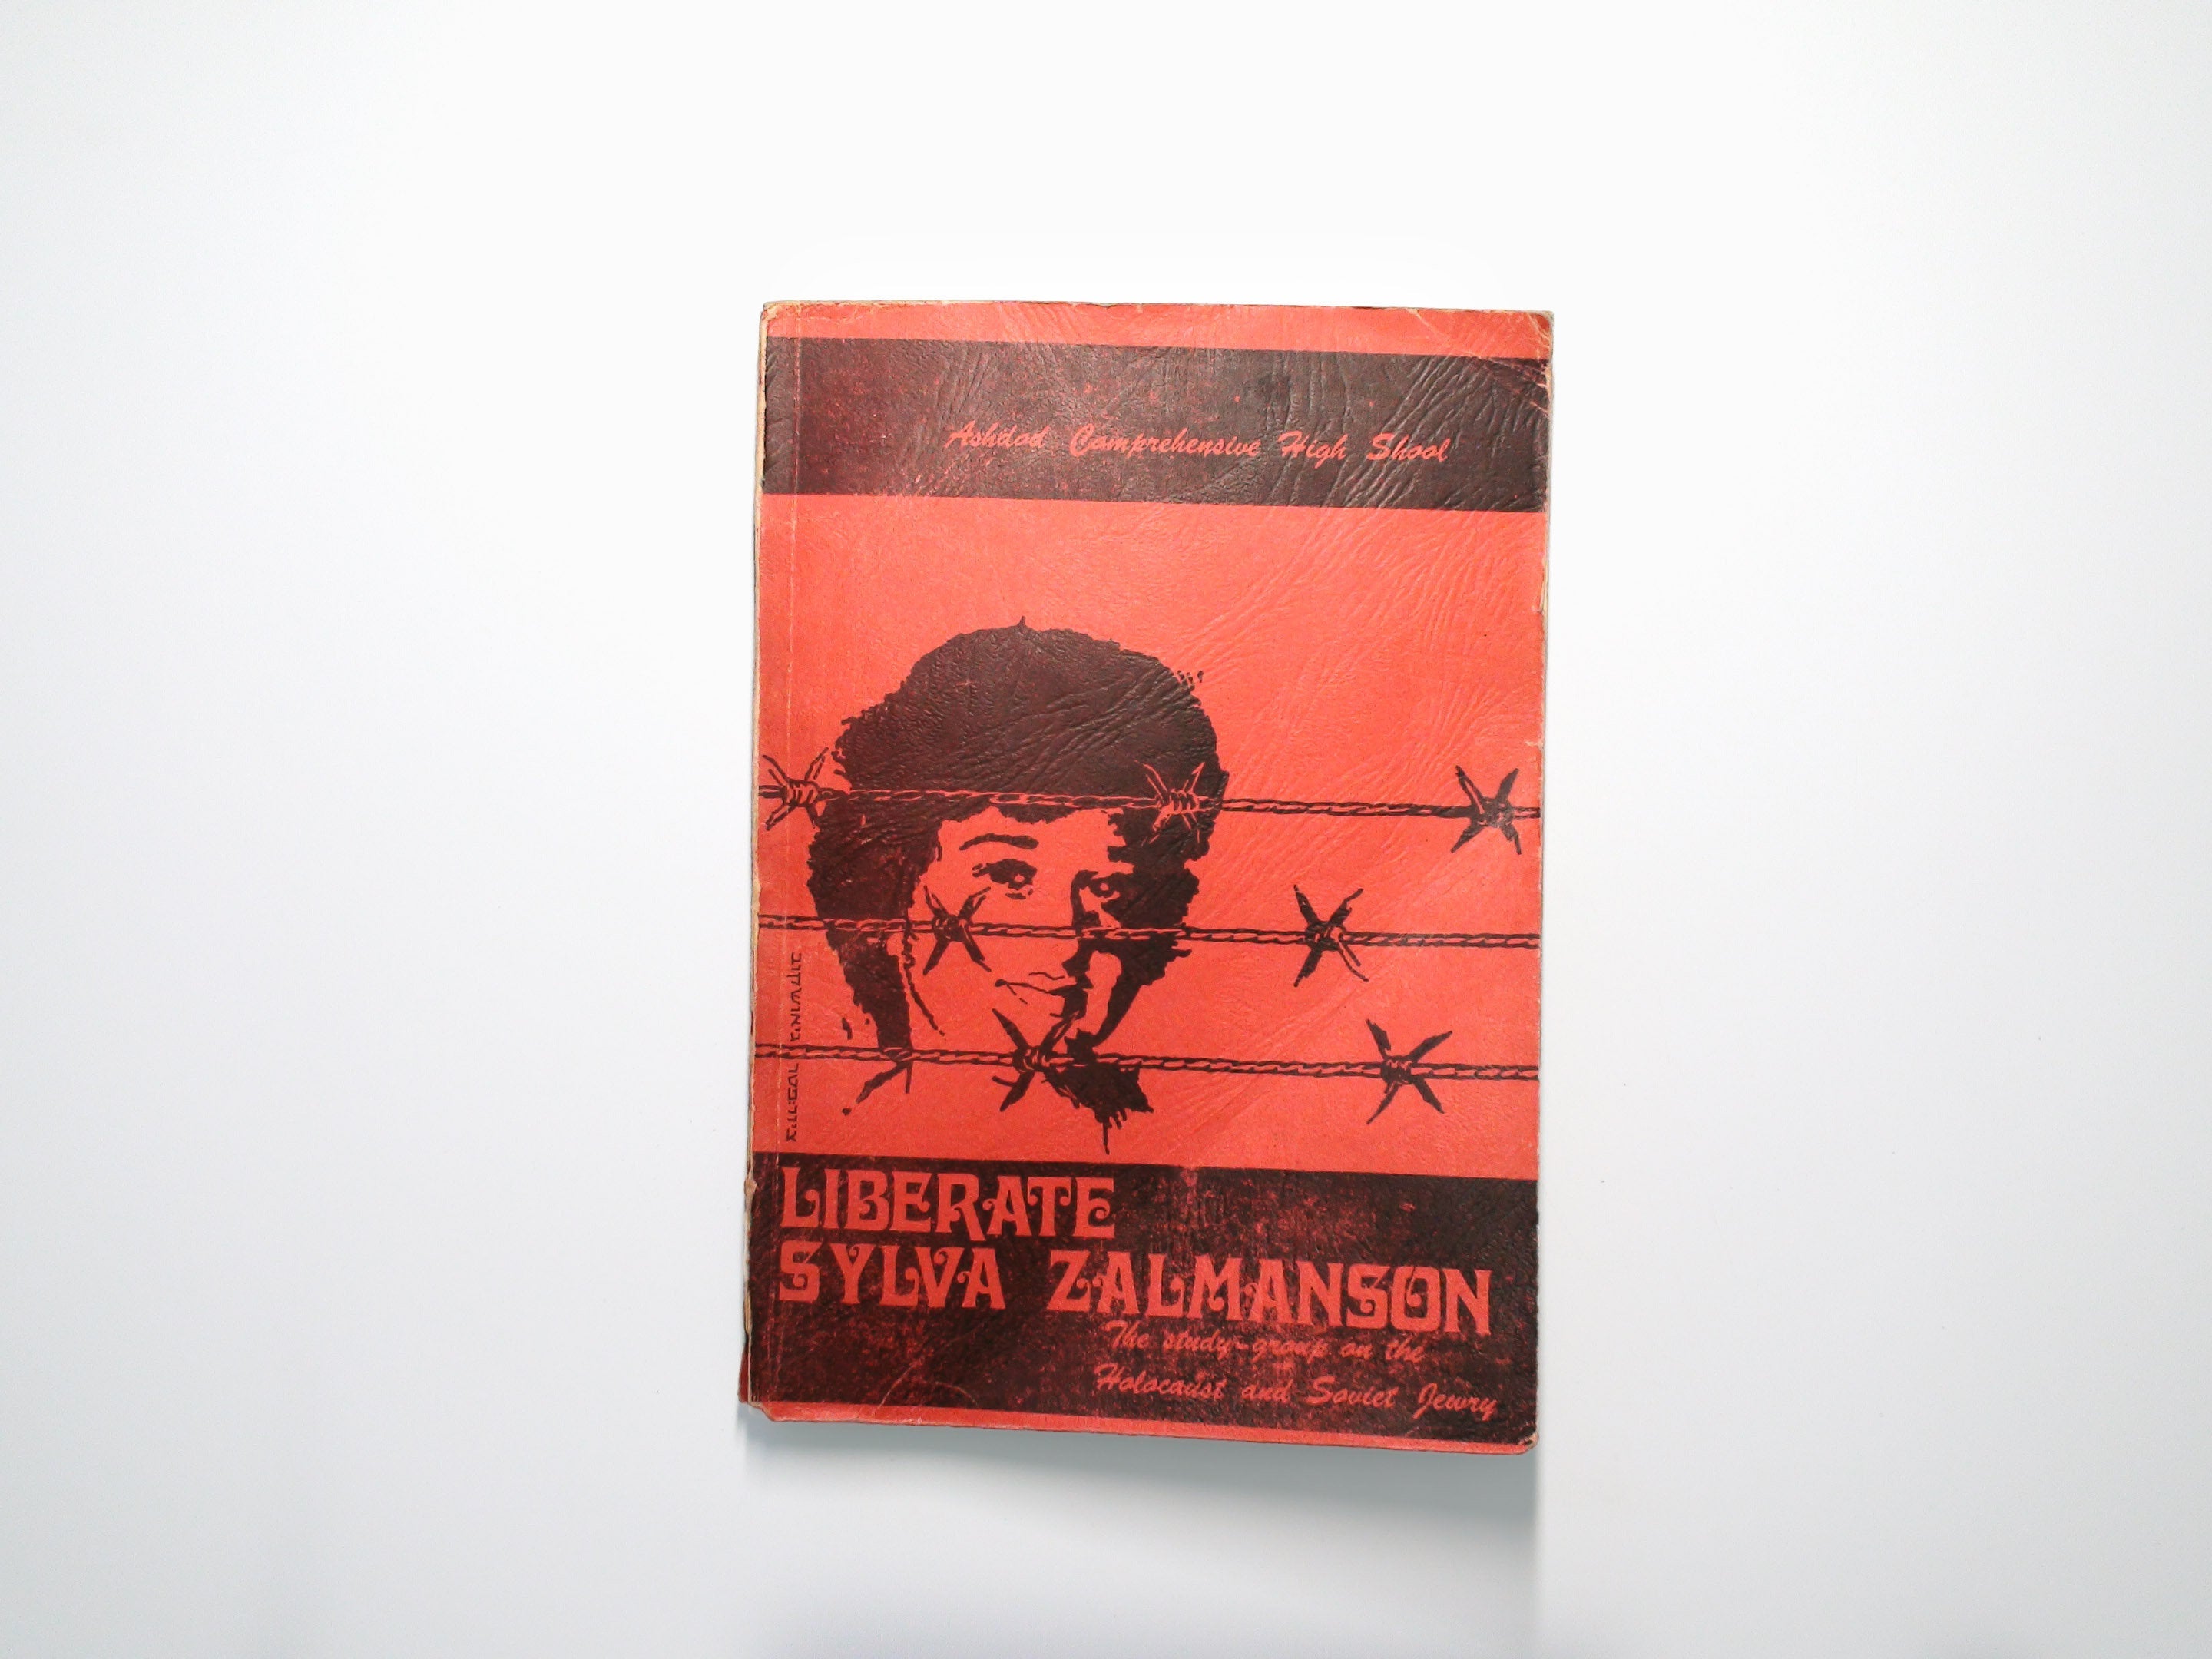 Liberate, Rare Reference Regarding Sylva Zalmanston and Jewish Prisoners in USSR